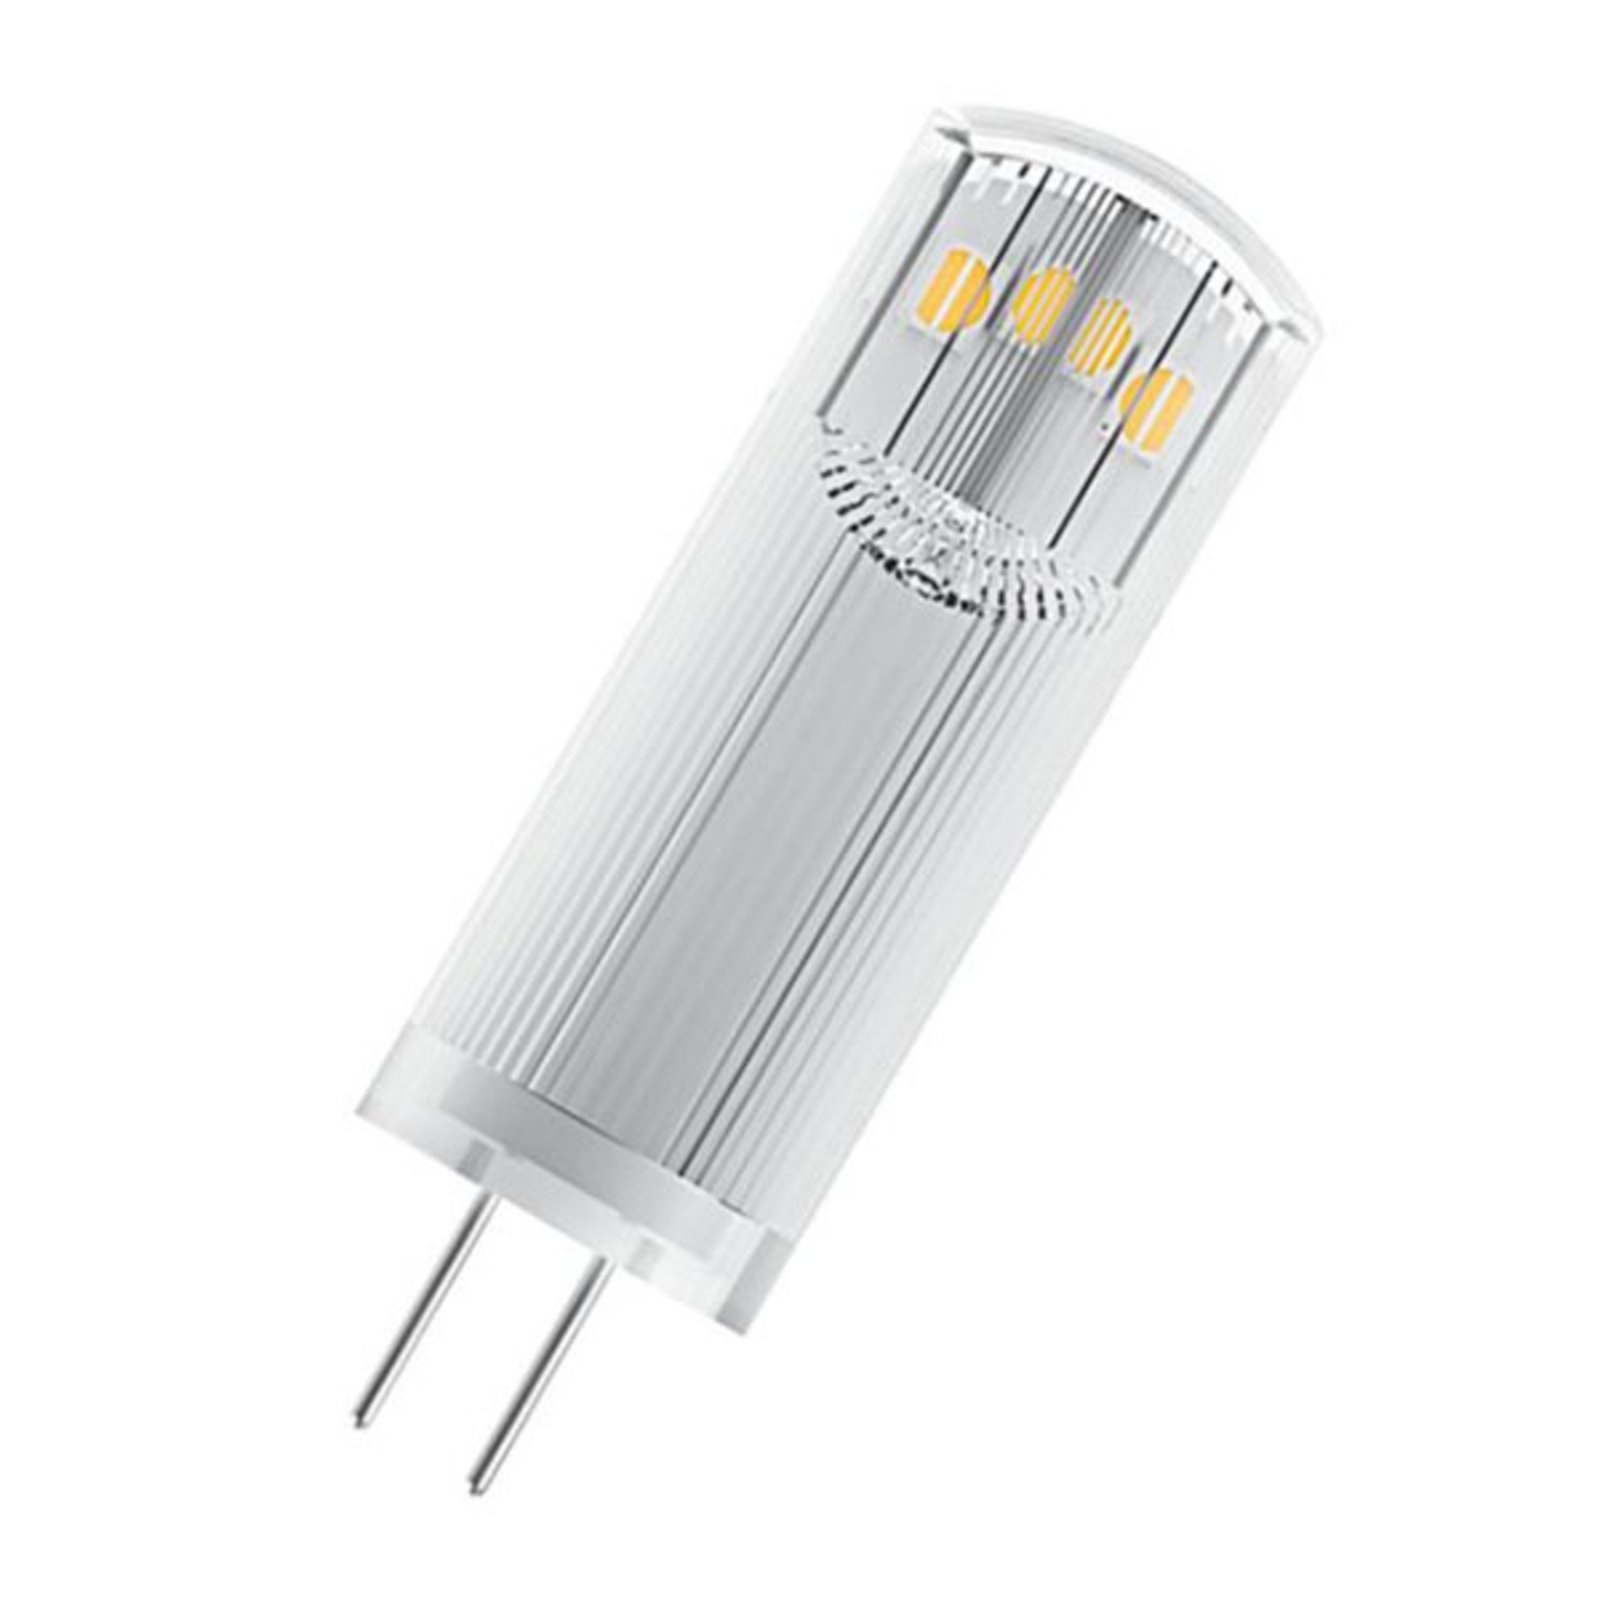 OSRAM LED pinová žárovka G4 1,8W 2 700 K čirá 2ks